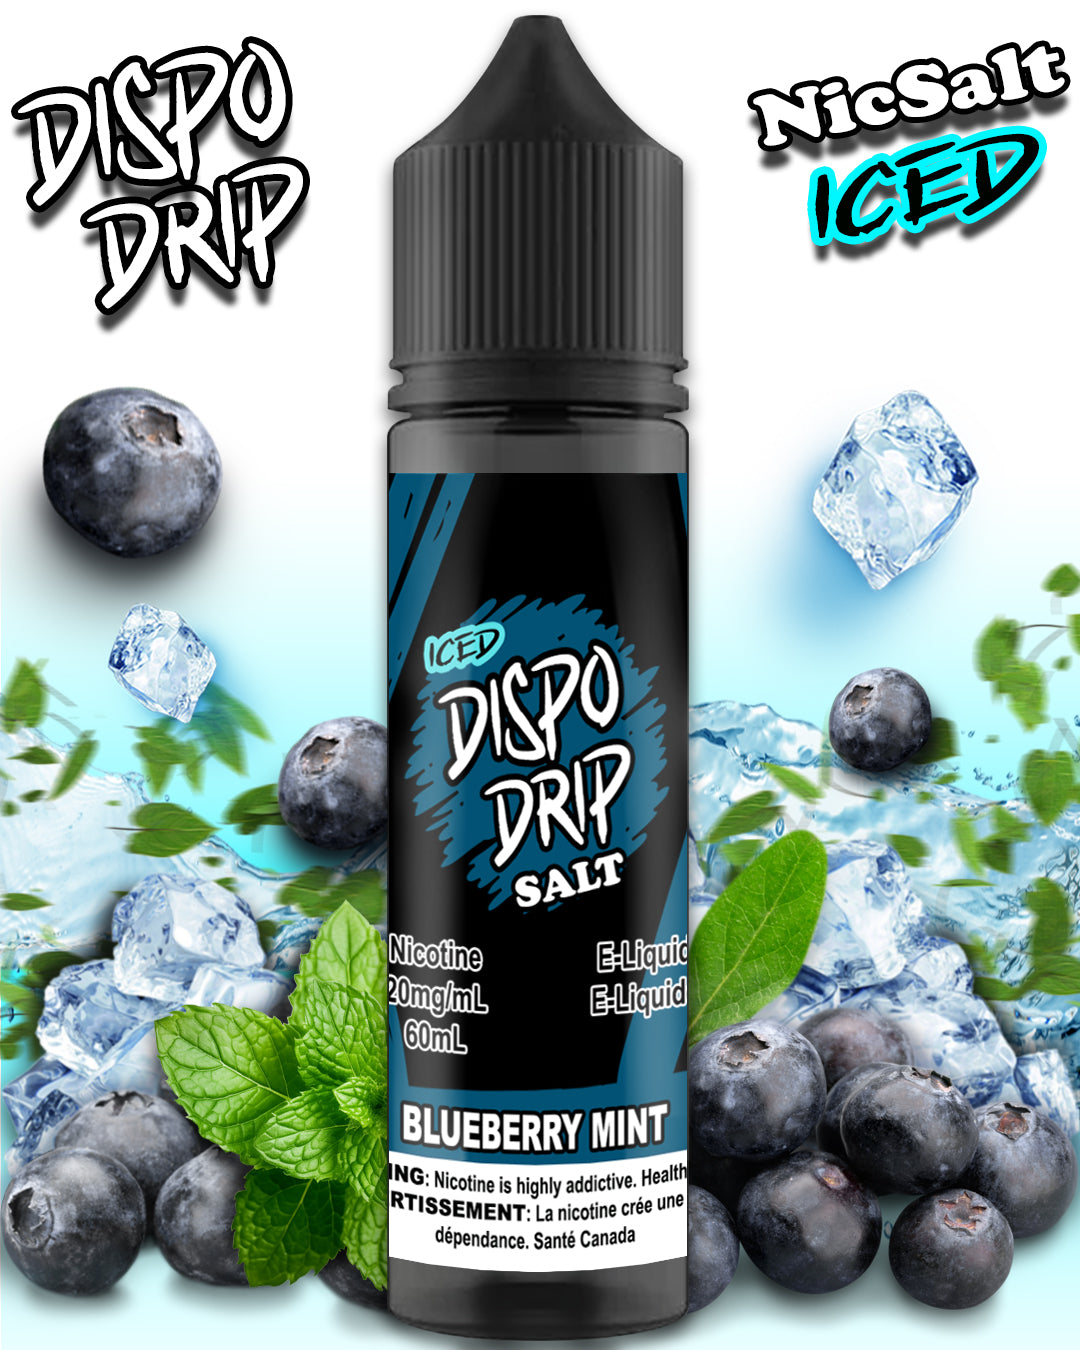 DISPO DRIP ICED - BLUEBERRY MINT SALT